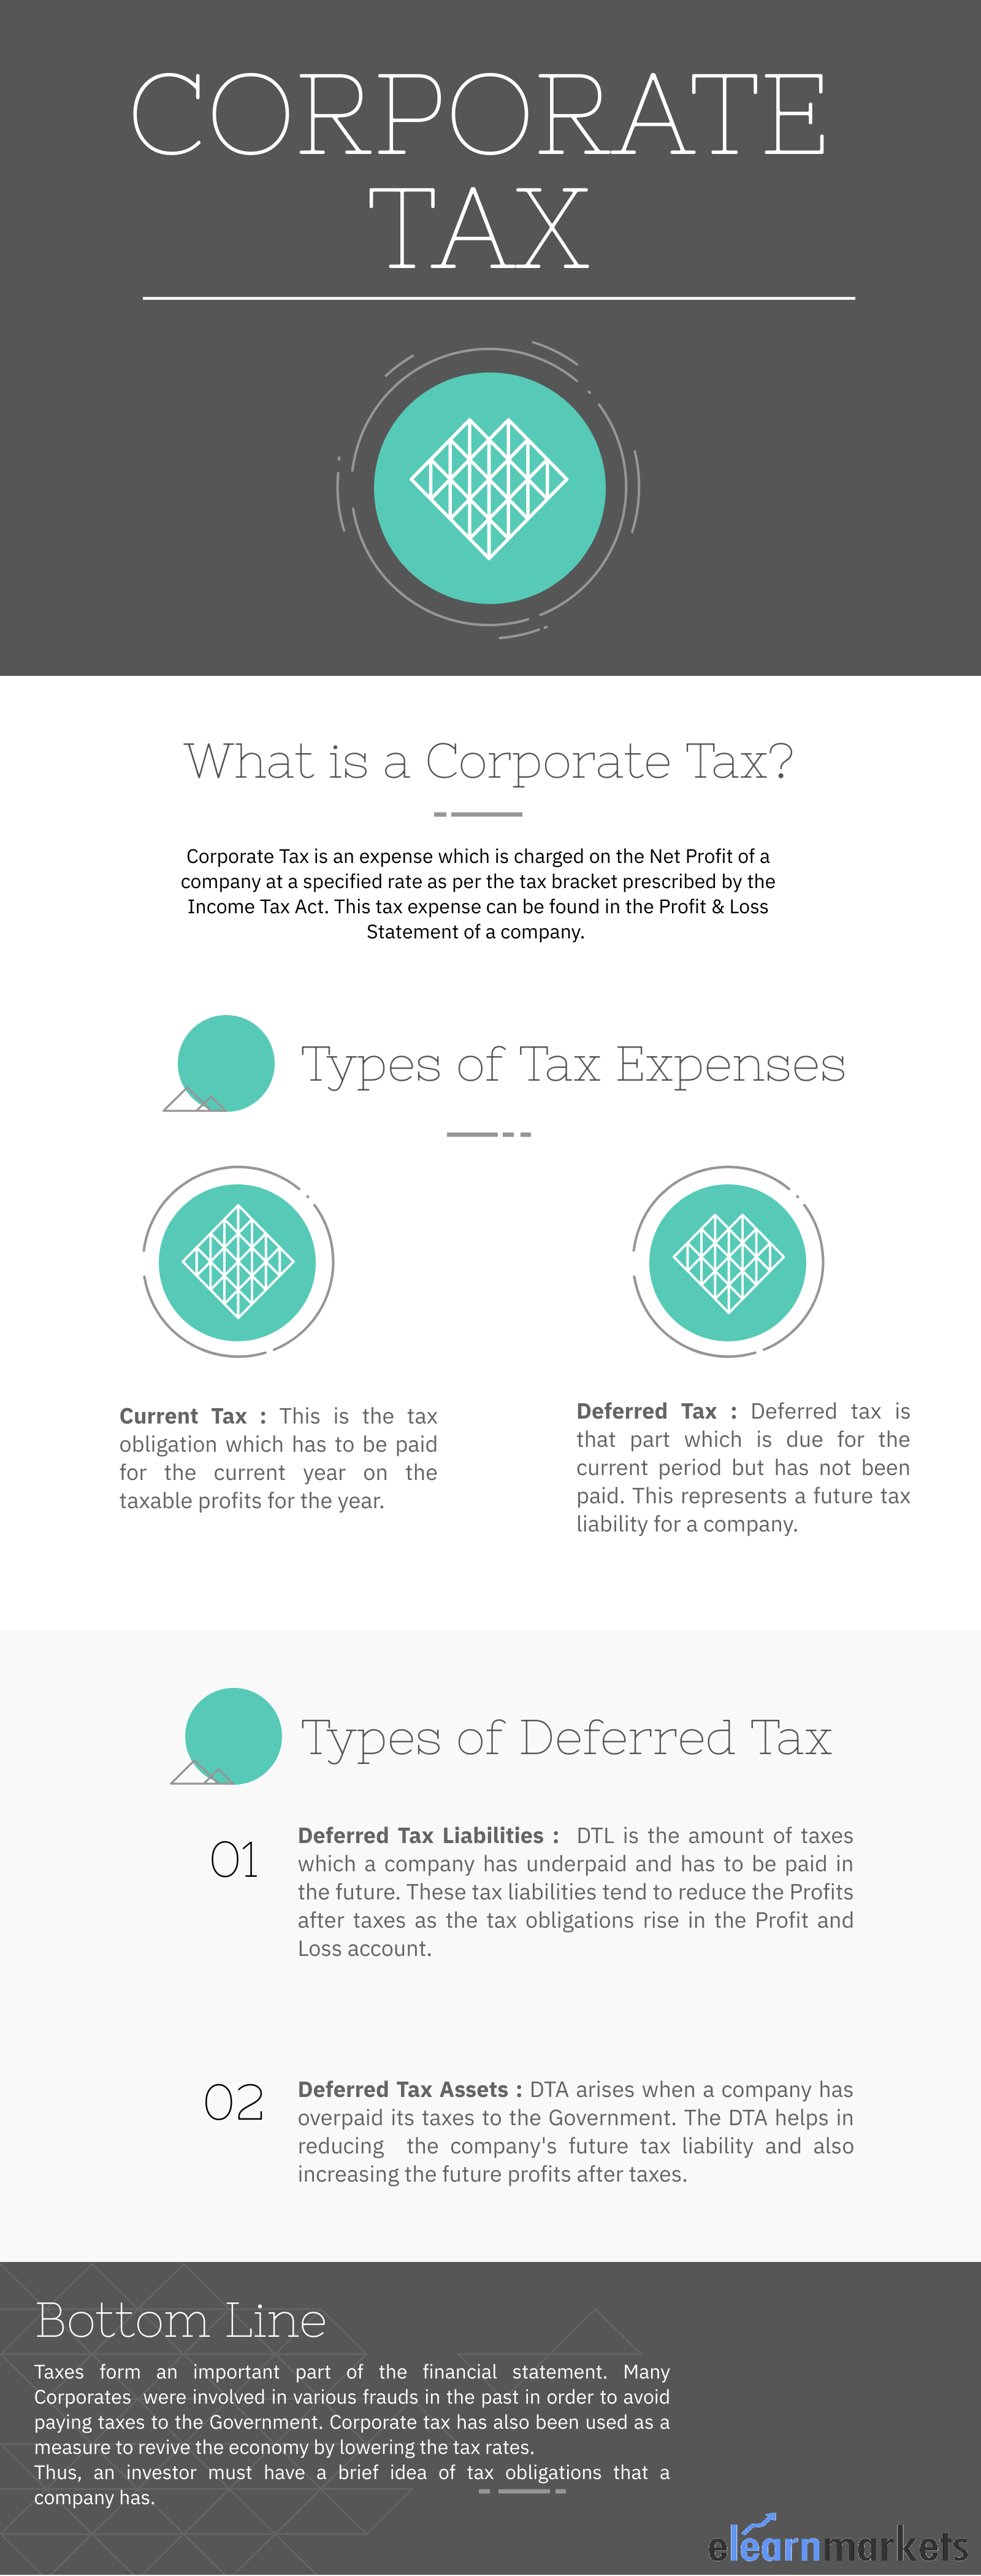 Corporate Tax in India 2